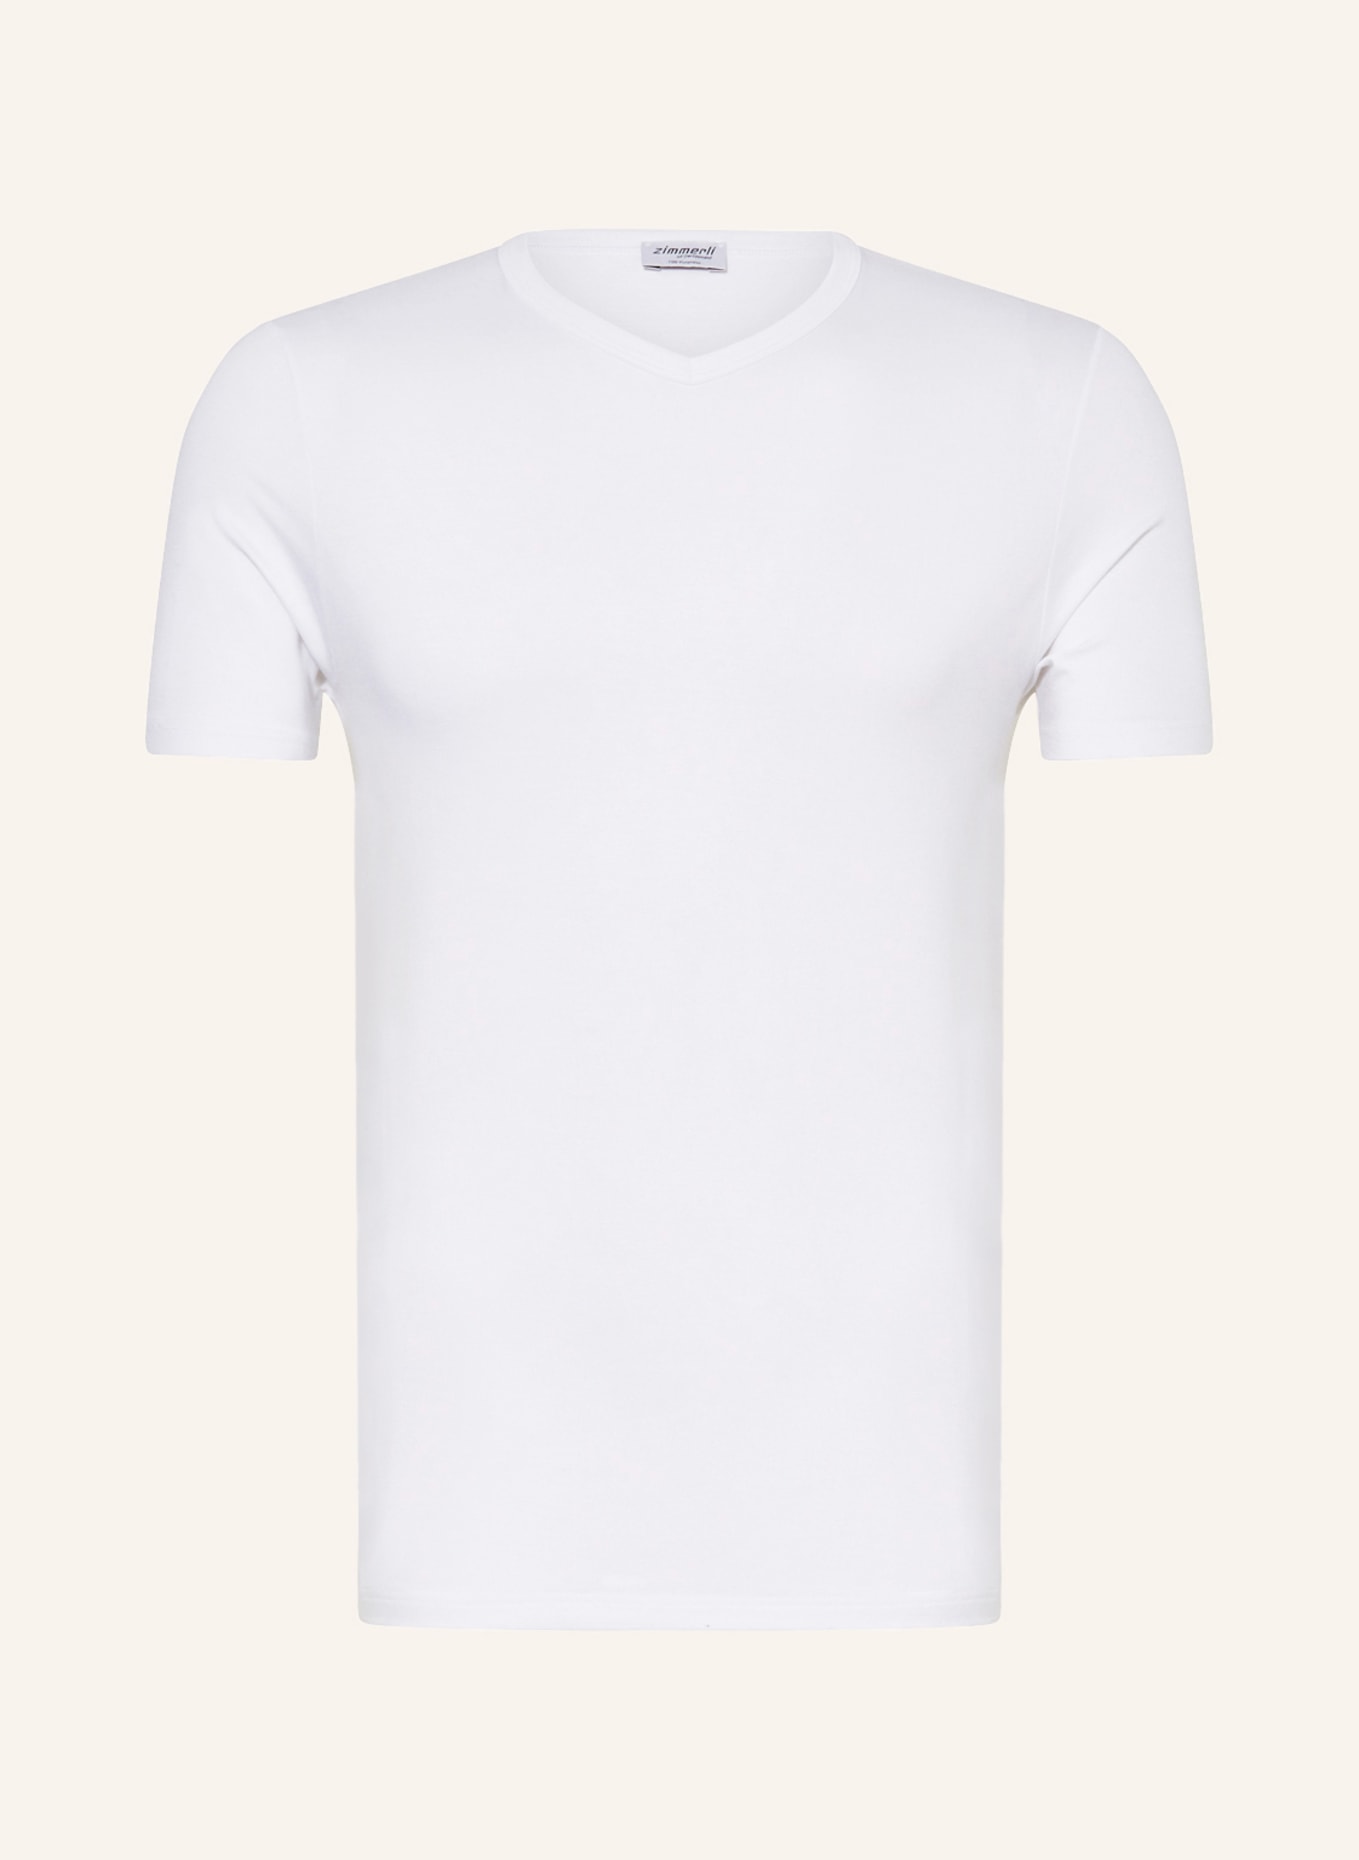 zimmerli T-shirt PURENESS, Kolor: BIAŁY (Obrazek 1)